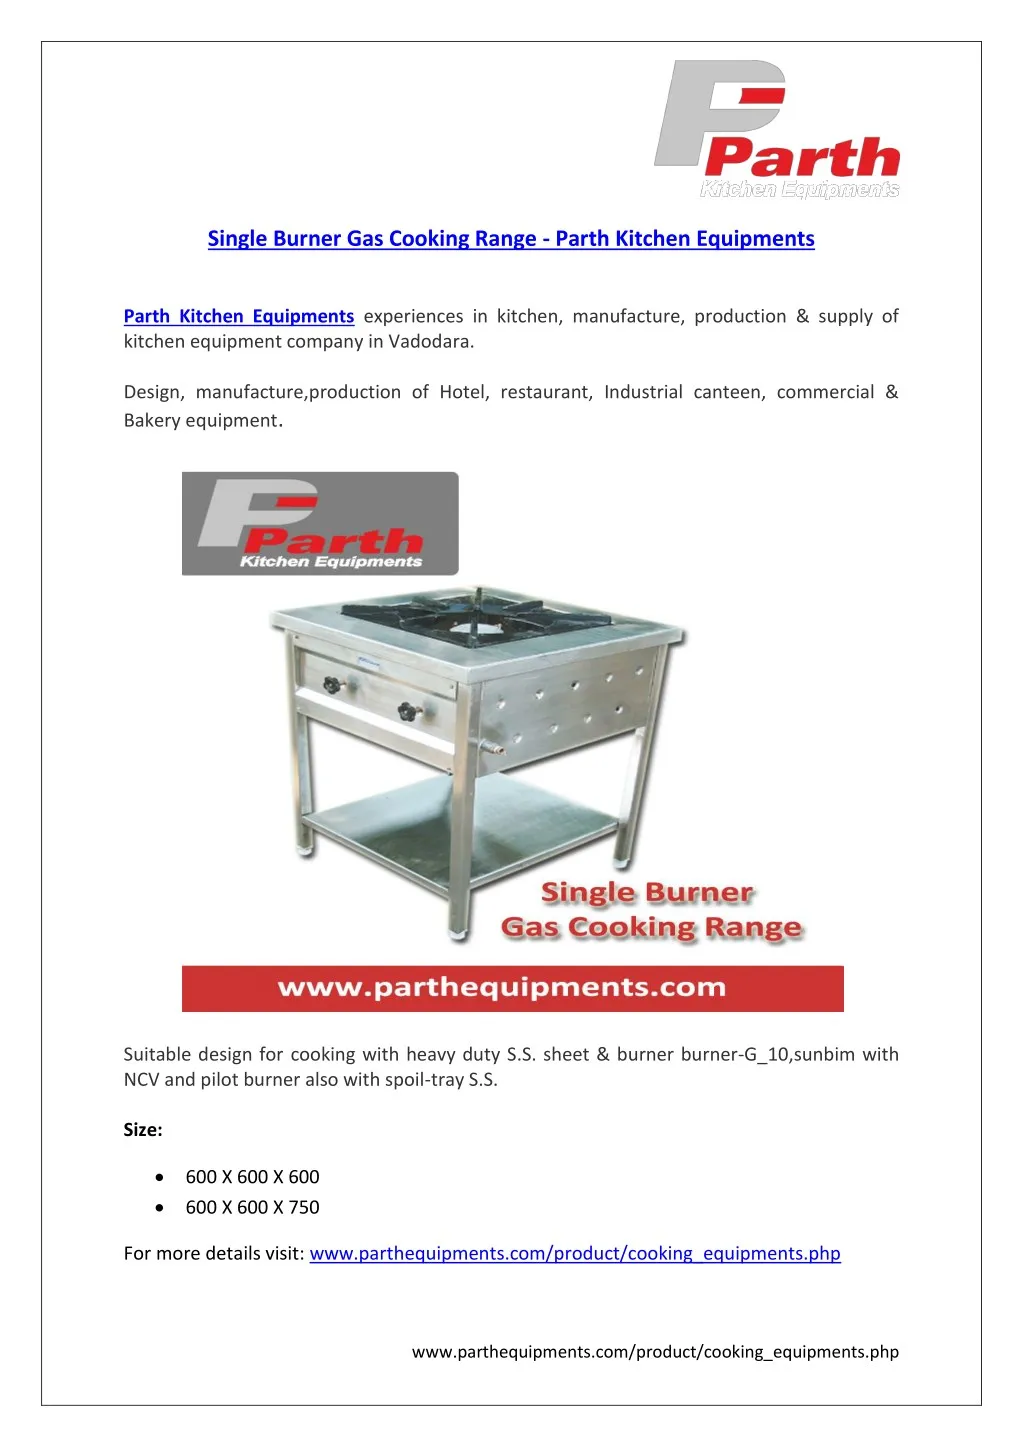 single burner gas cooking range parth kitchen